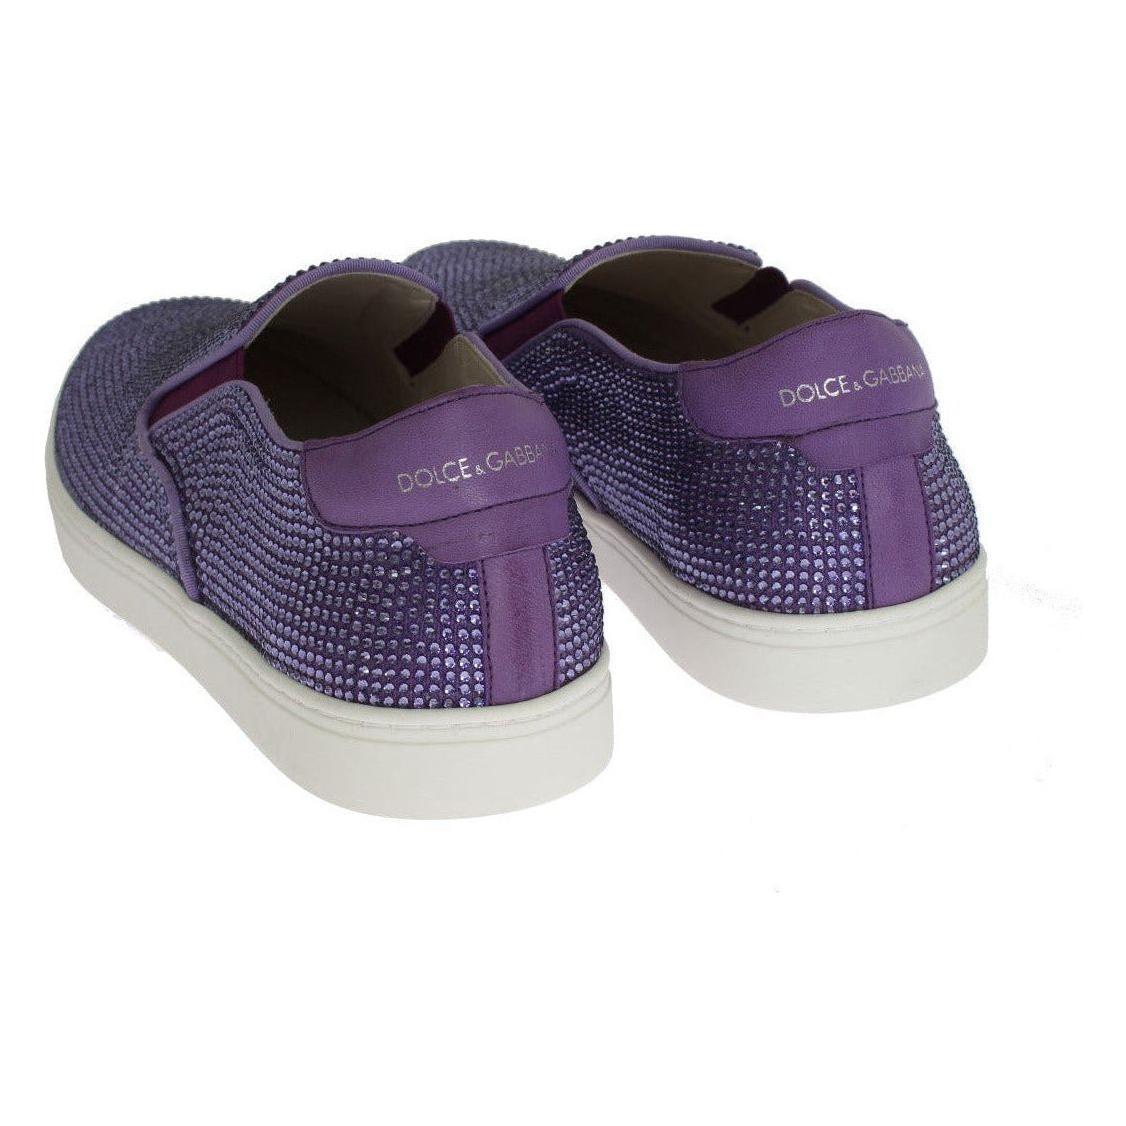 Dolce & Gabbana Elegant Purple Strass Fashion Sneakers purple-strass-canvas-logo-sneakers MAN SNEAKERS 321302-purple-strass-canvas-logo-sneakers-7.jpg